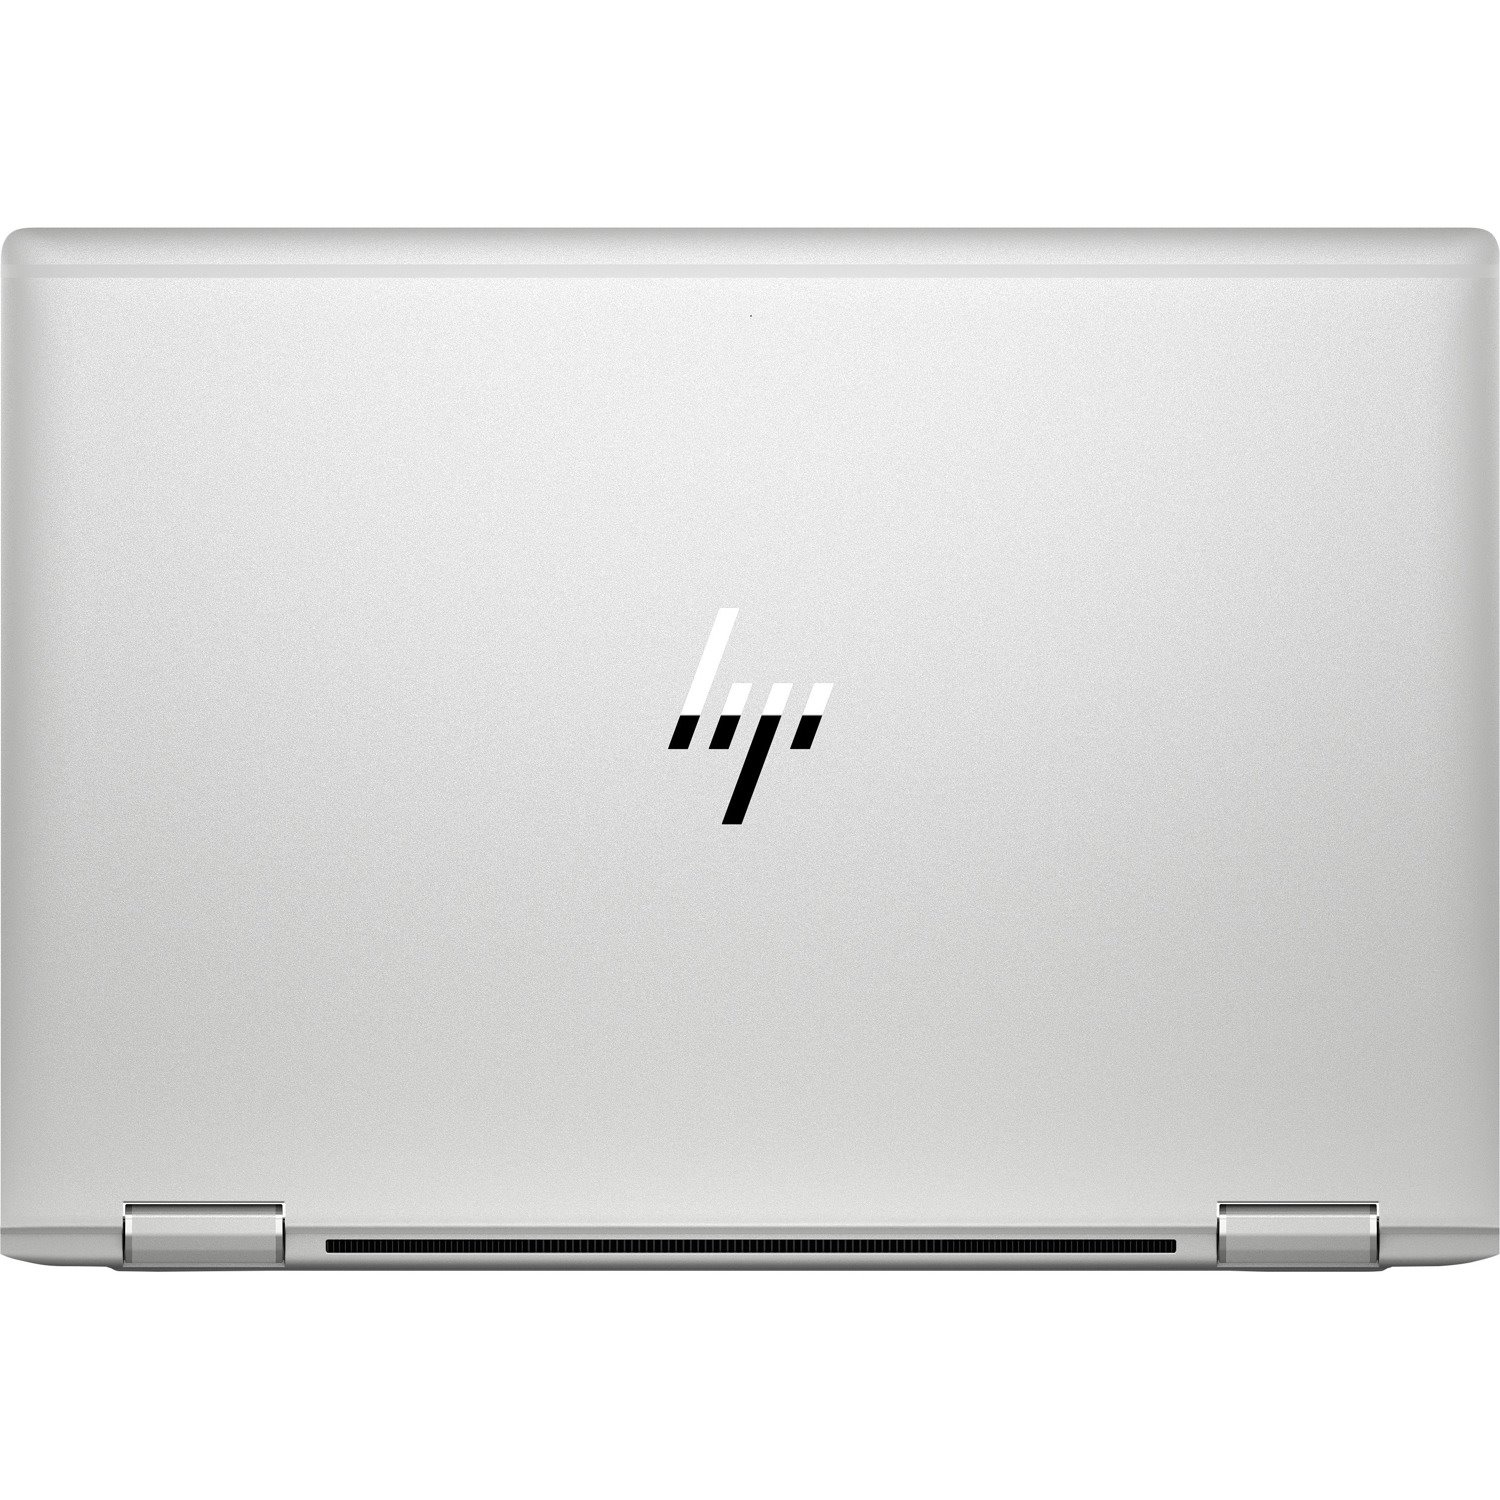 HP EliteBook x360 1030 G4 13.3" Touchscreen Convertible 2 in 1 Notebook - Intel Core i7 8th Gen i7-8565U - 8 GB - 256 GB SSD